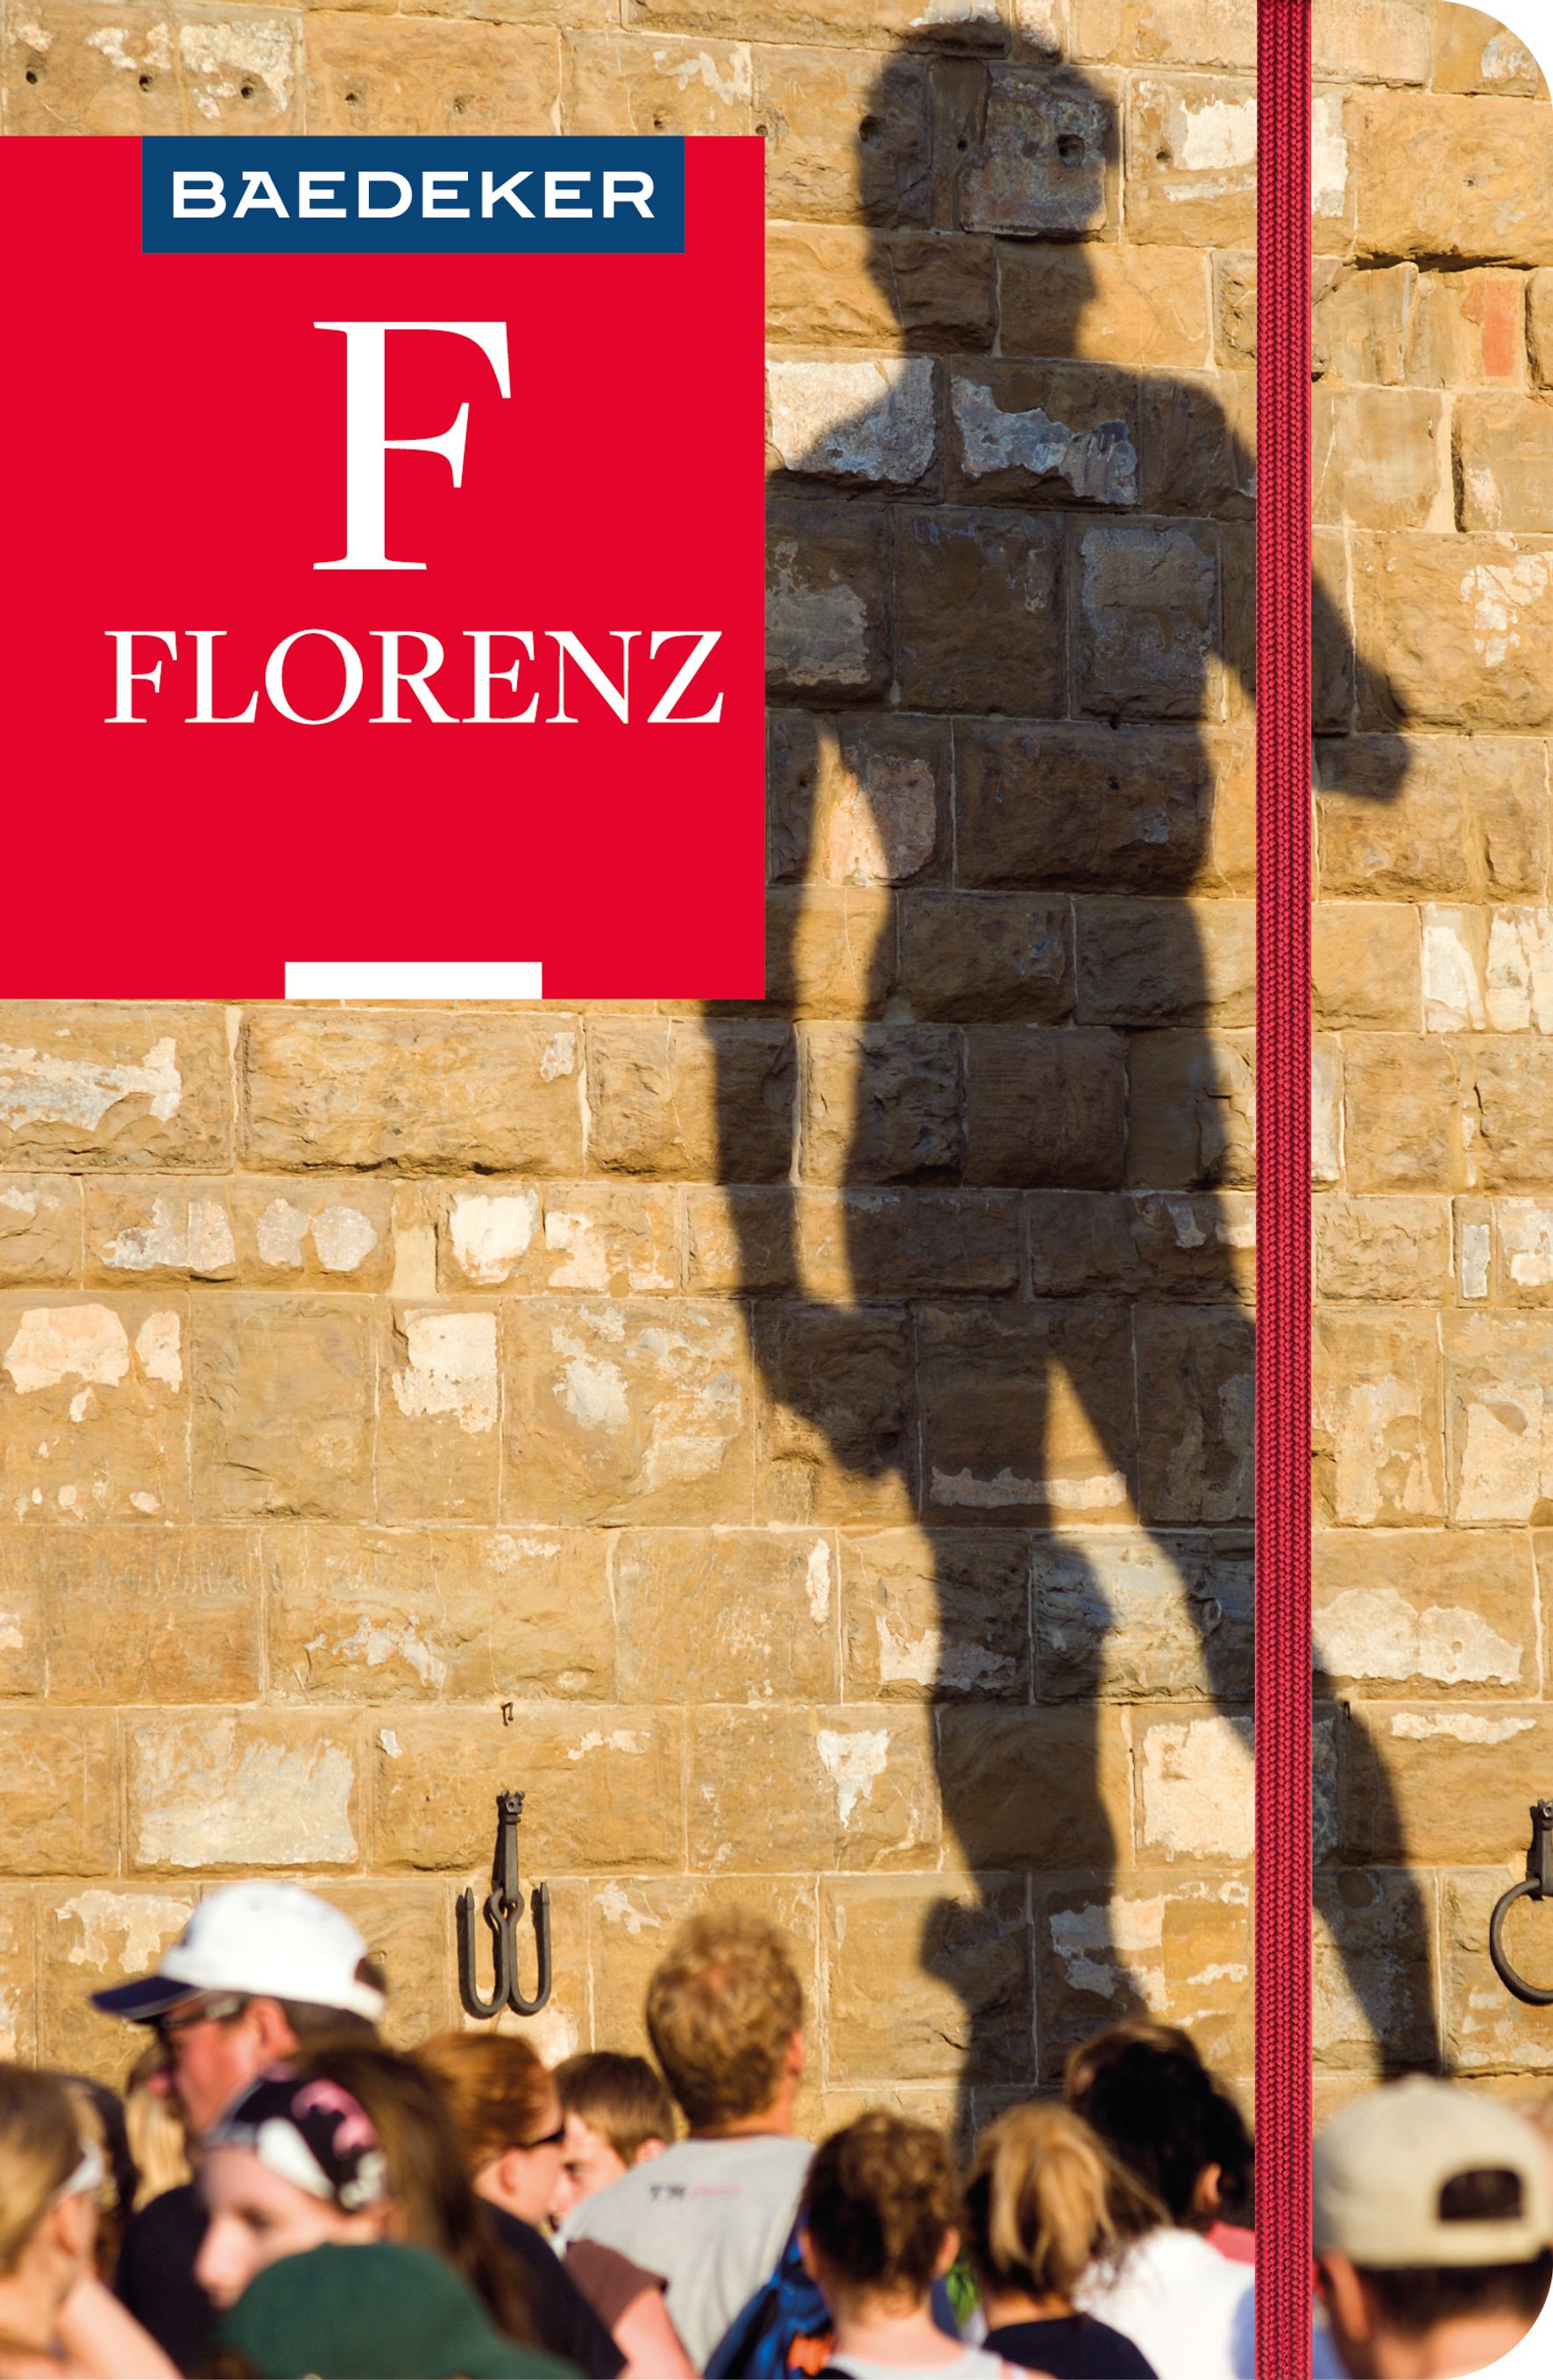 Baedeker Florenz